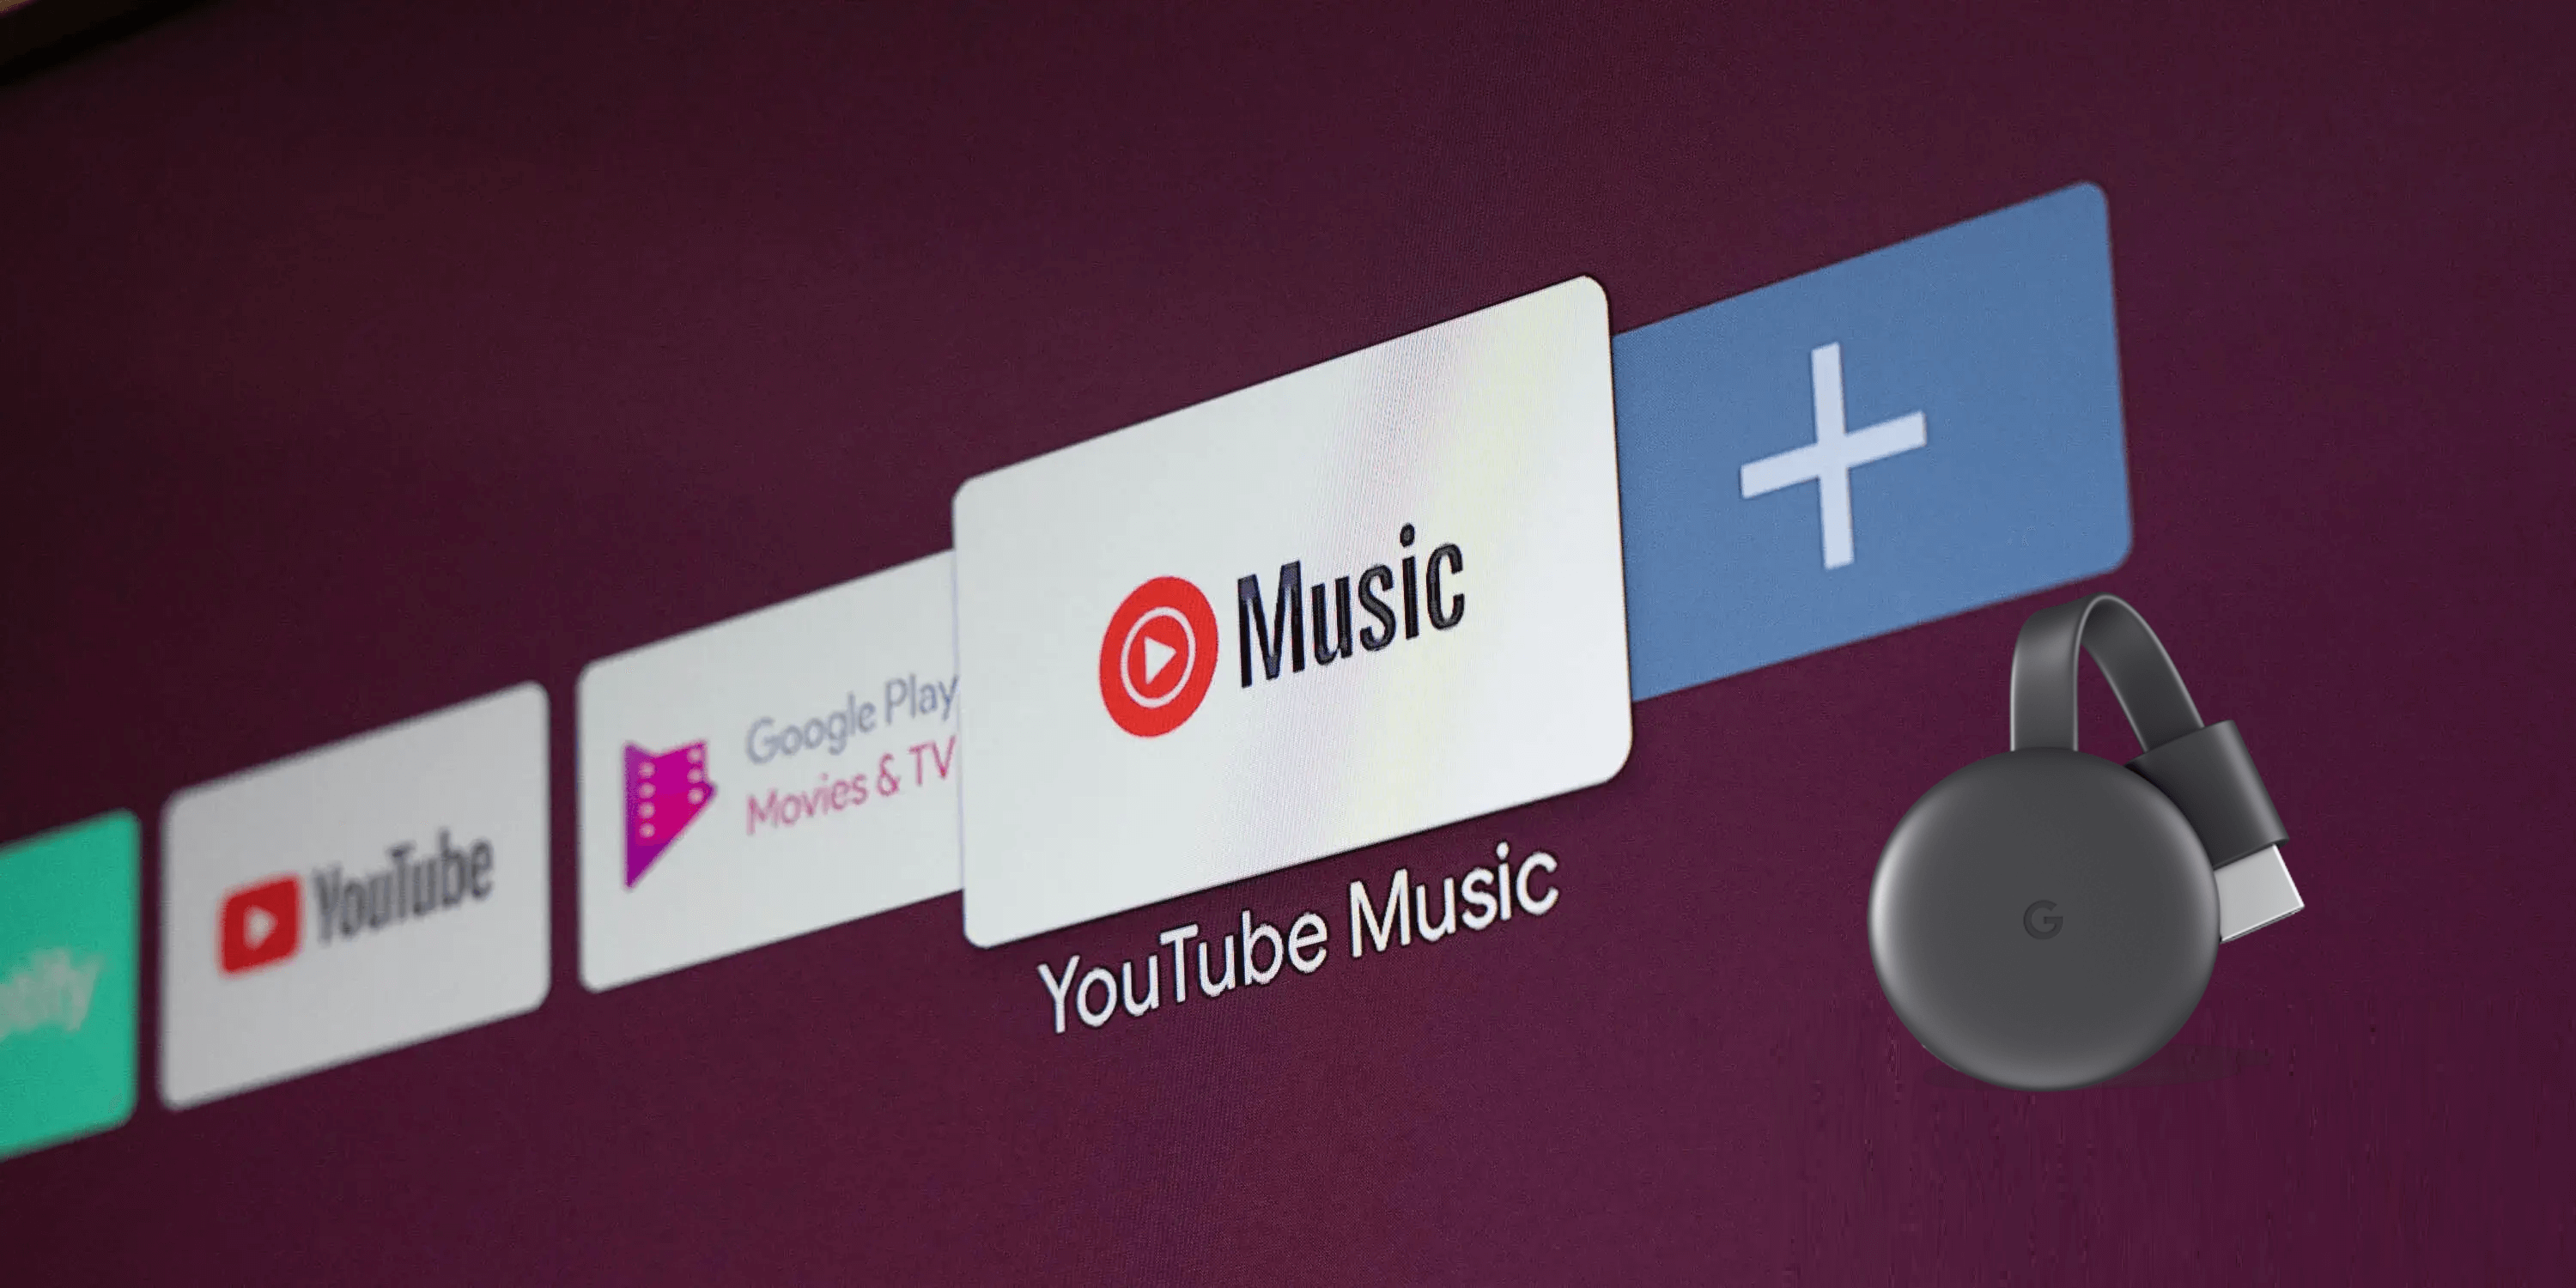 Chromecast YouTube Music app